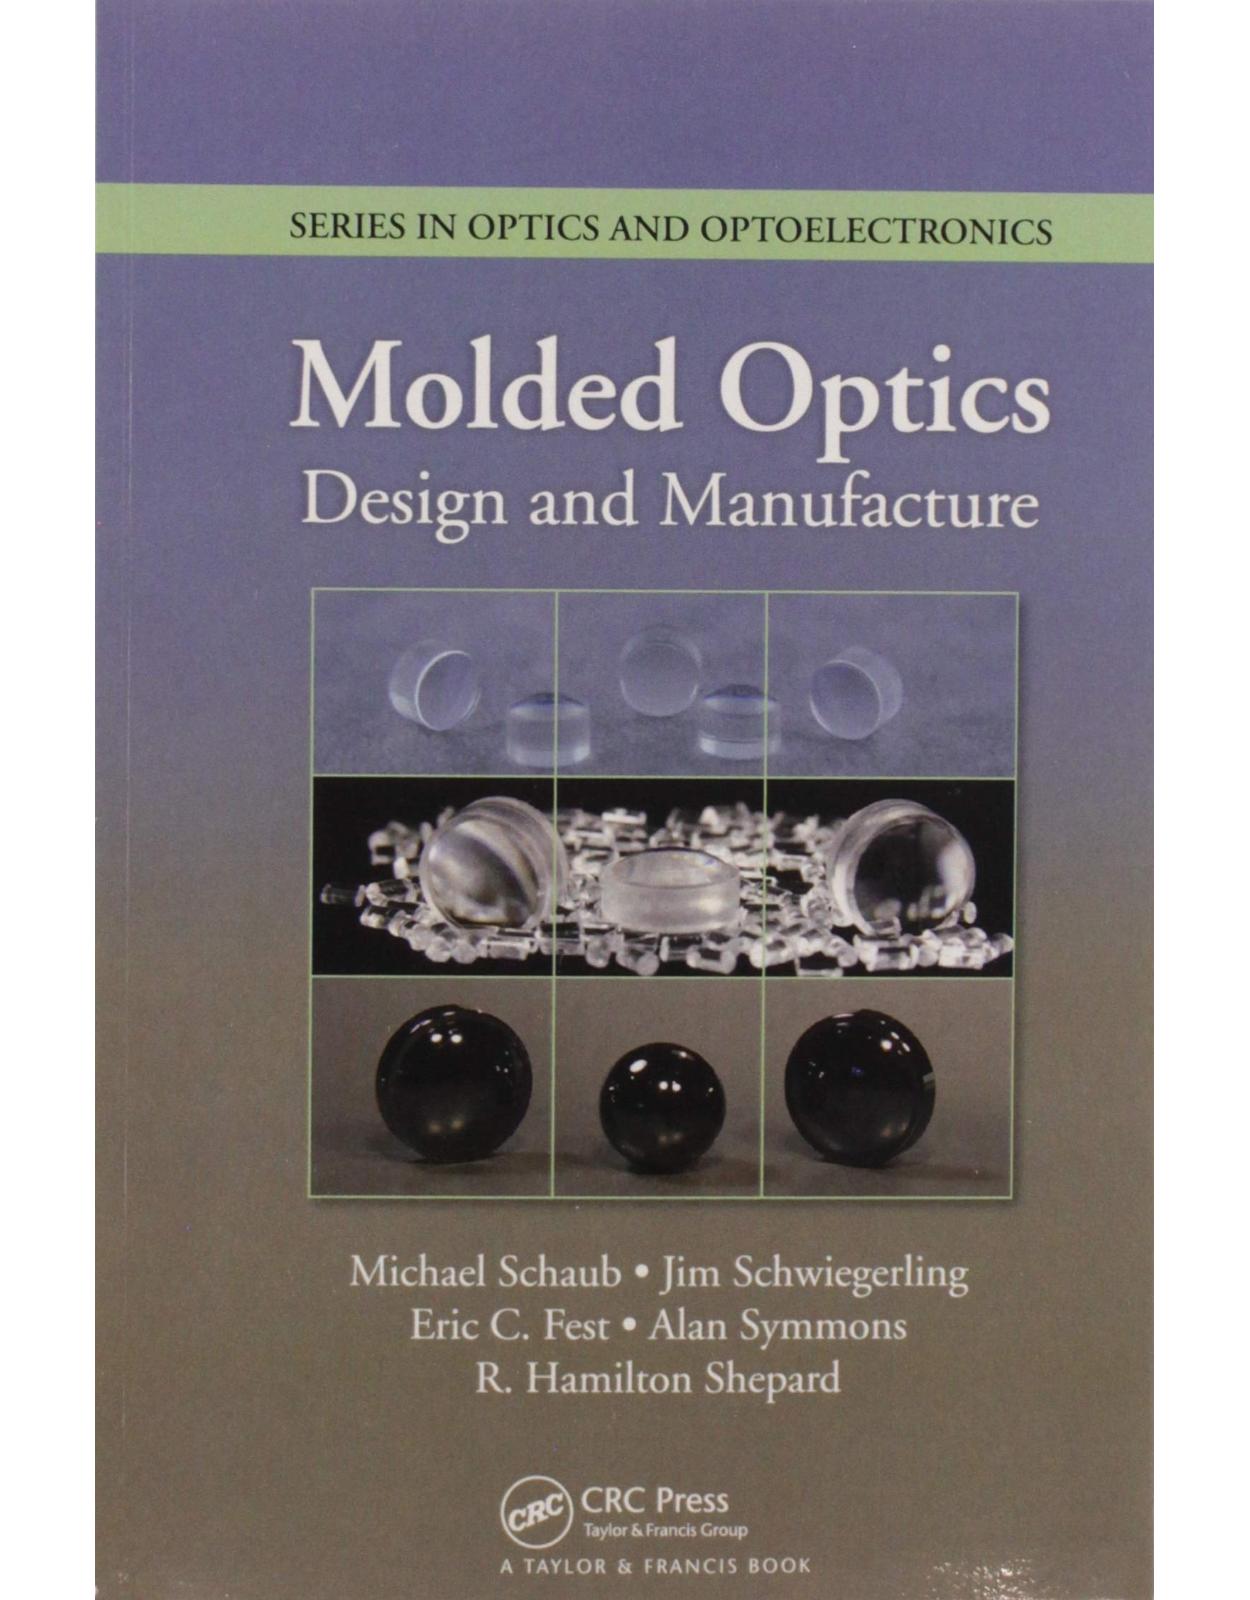 Molded Optics: Design and Manufacture